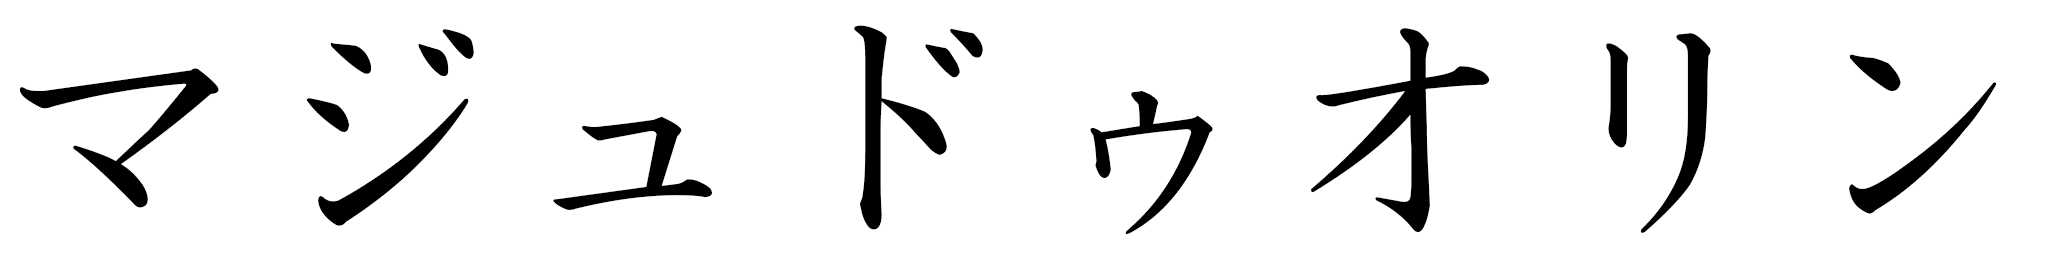 Majduoline en japonais